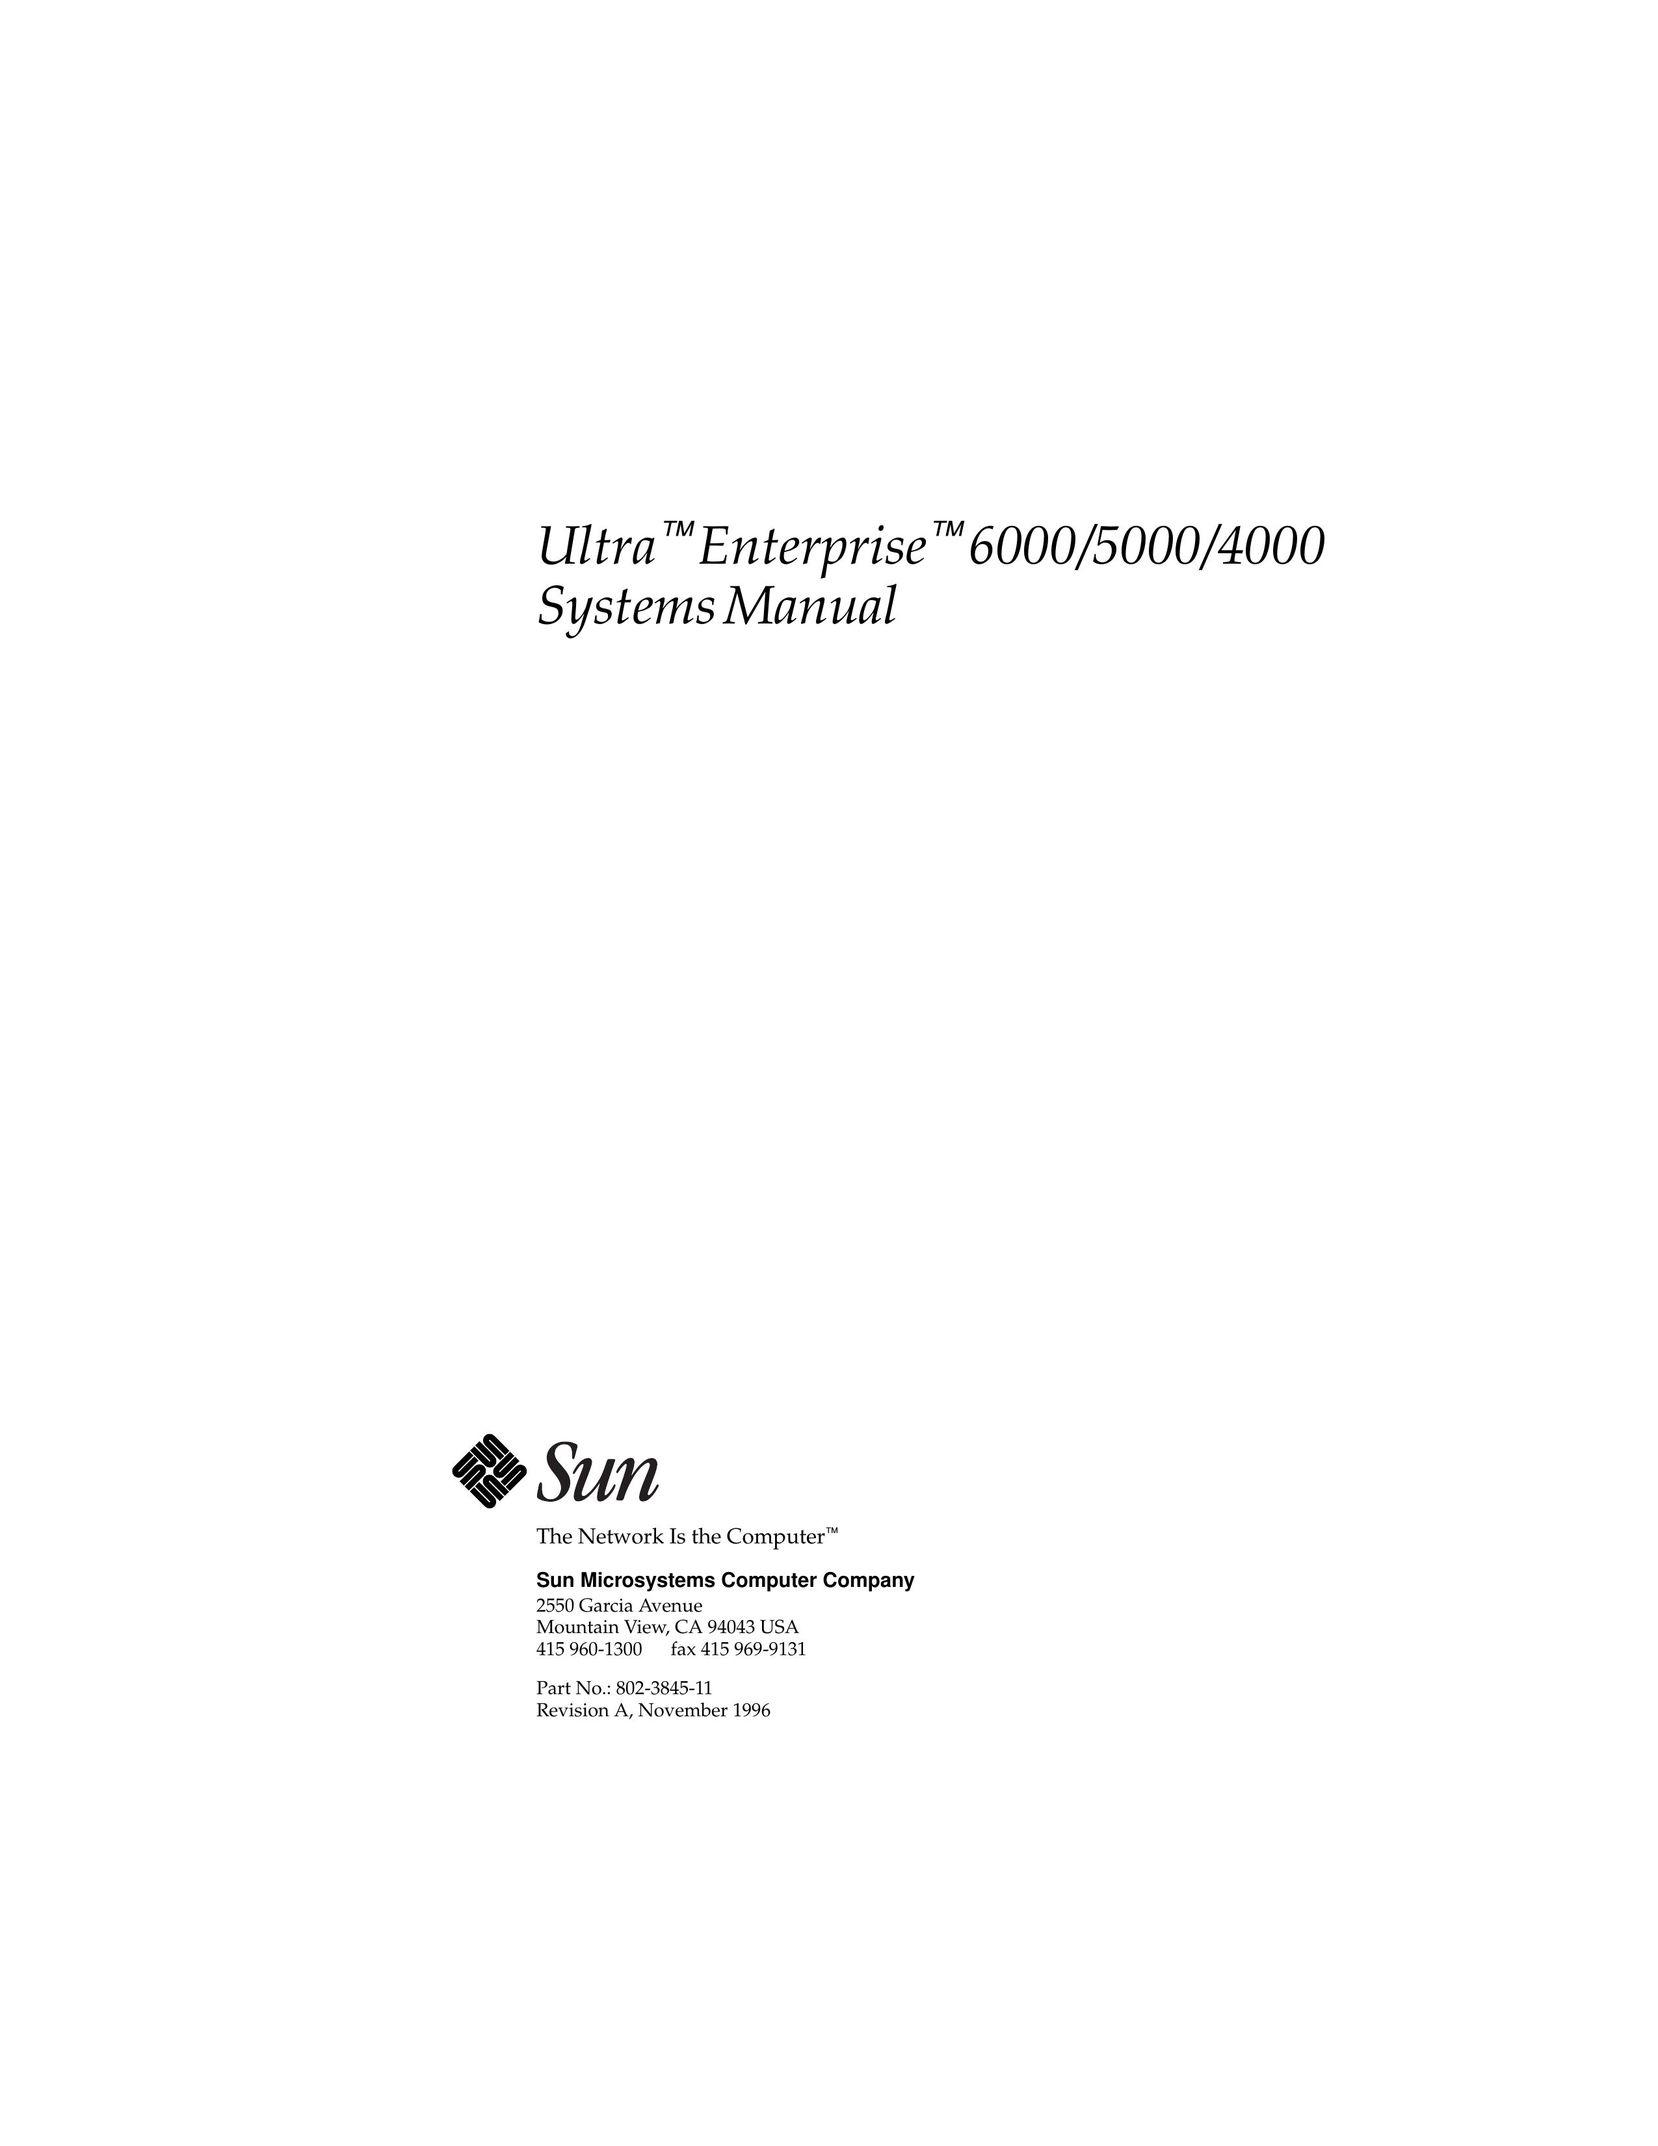 Sun Microsystems 6.0005E+11 Computer Hardware User Manual